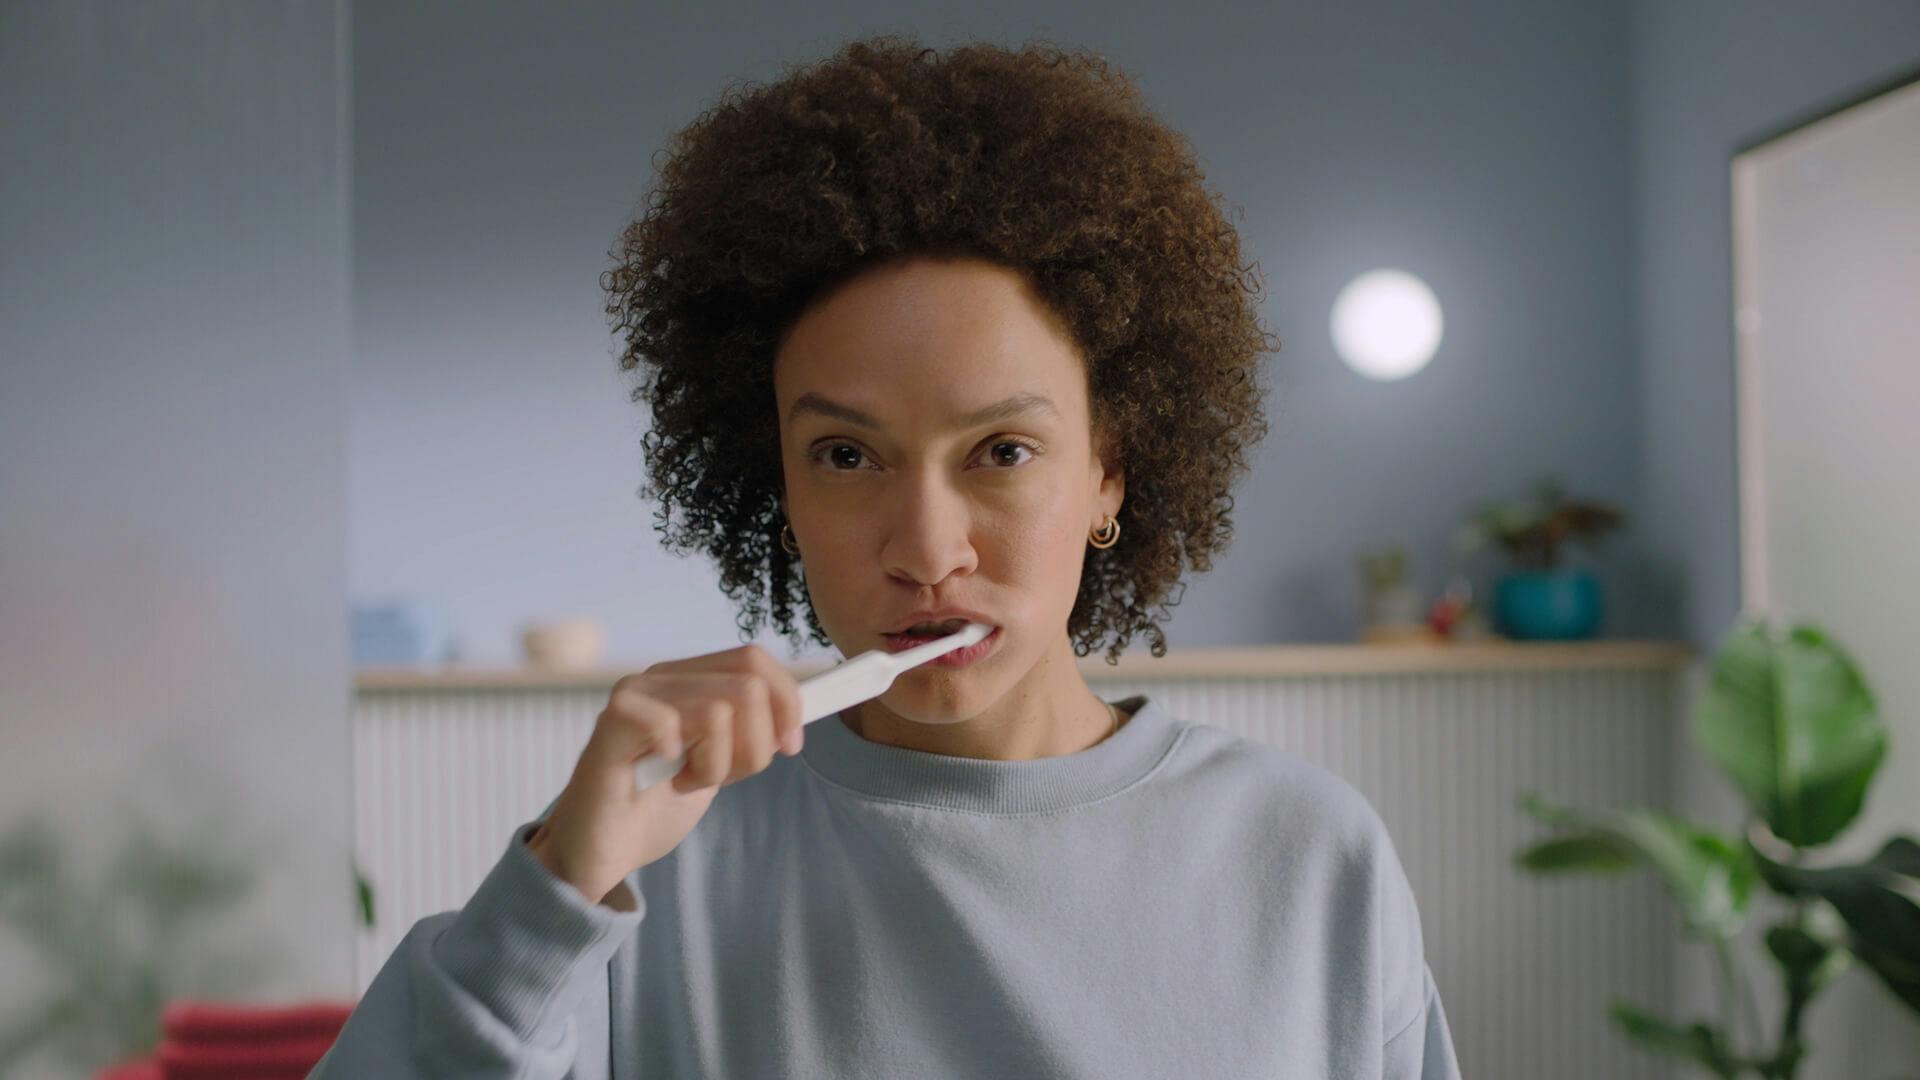 A woman brushing her teeth.